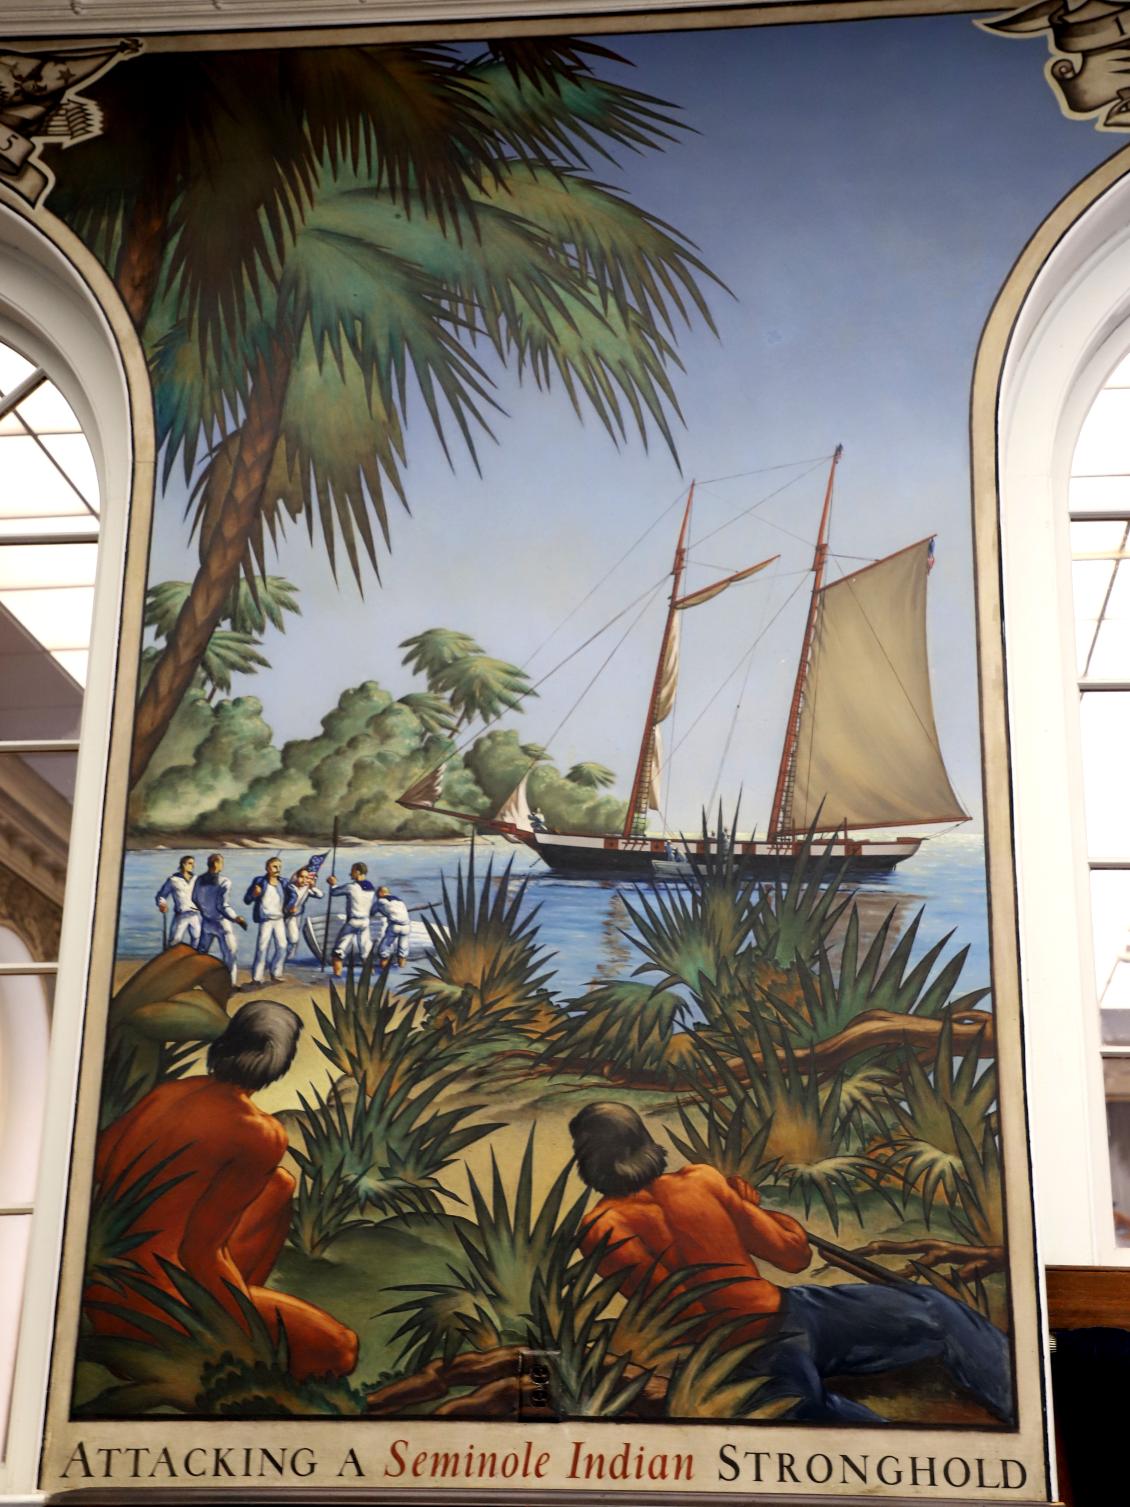 U.S. Coast Guard Academy - Hamilton Hall Mural - Seminole Stronghold in Florida